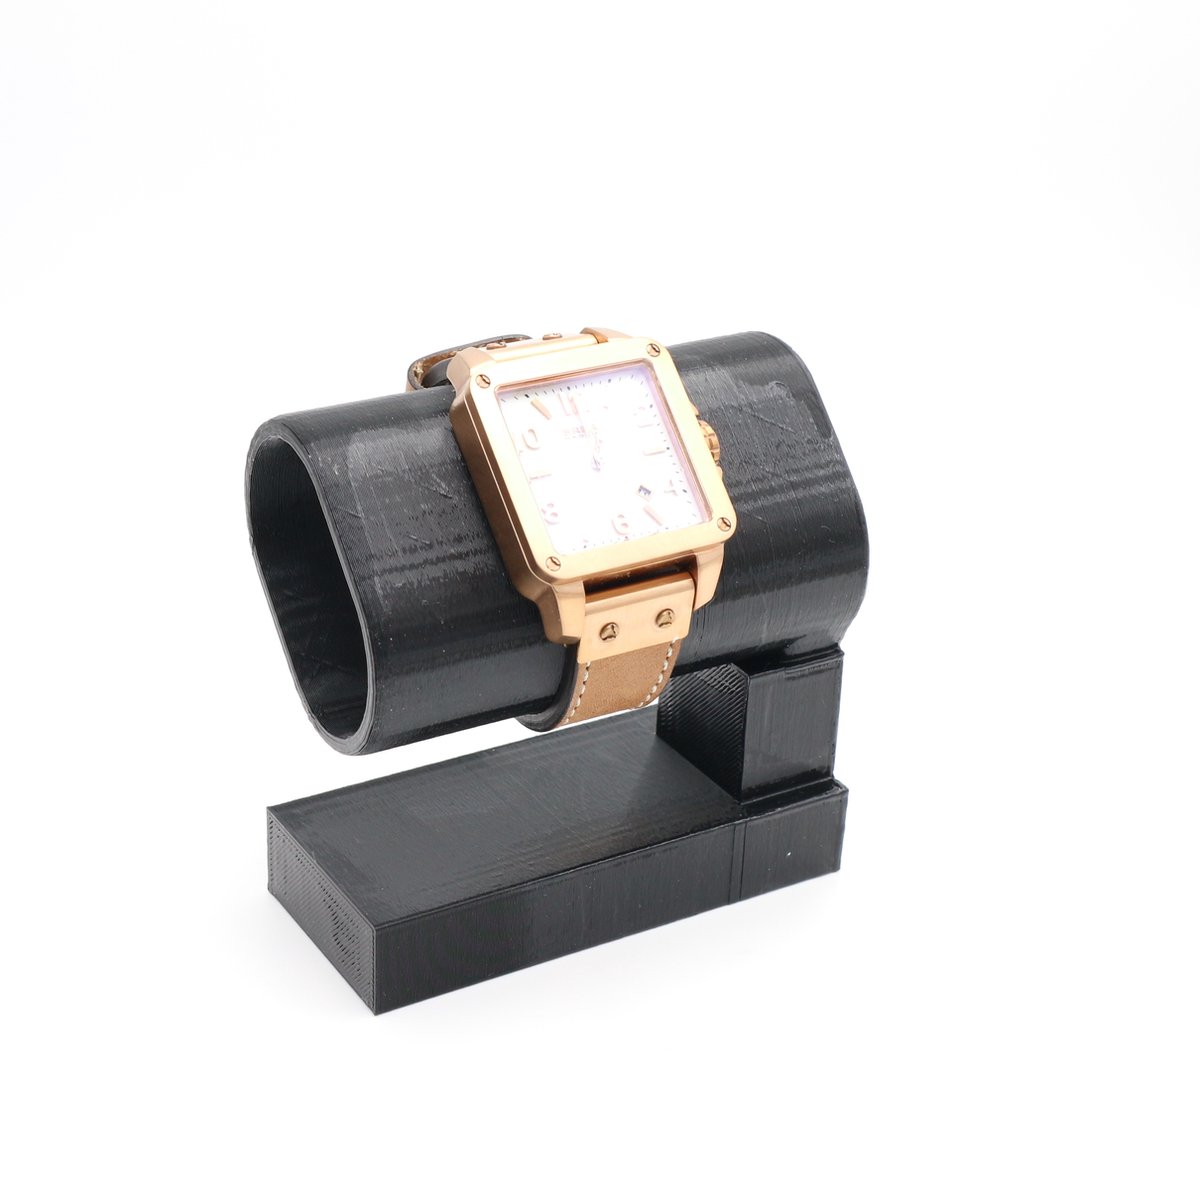 Fiastra Vettore - horloge houder voor 2 horloges - standaard - display horloges - watch stand